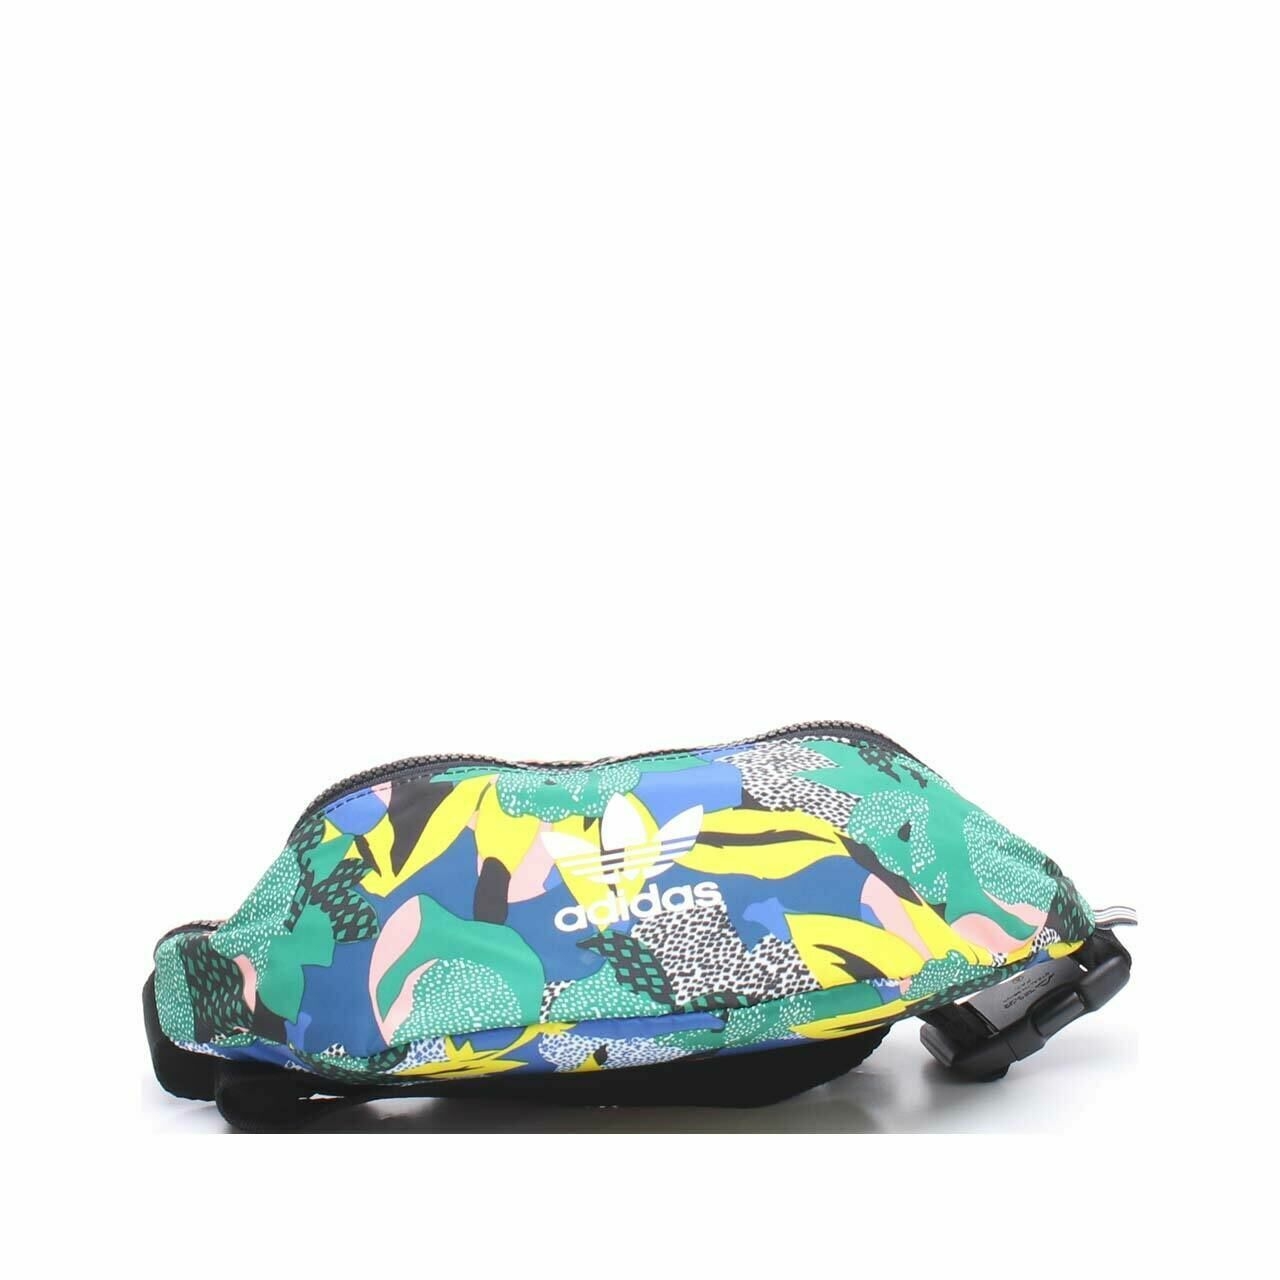 Adidas Multicolor Waist Bag